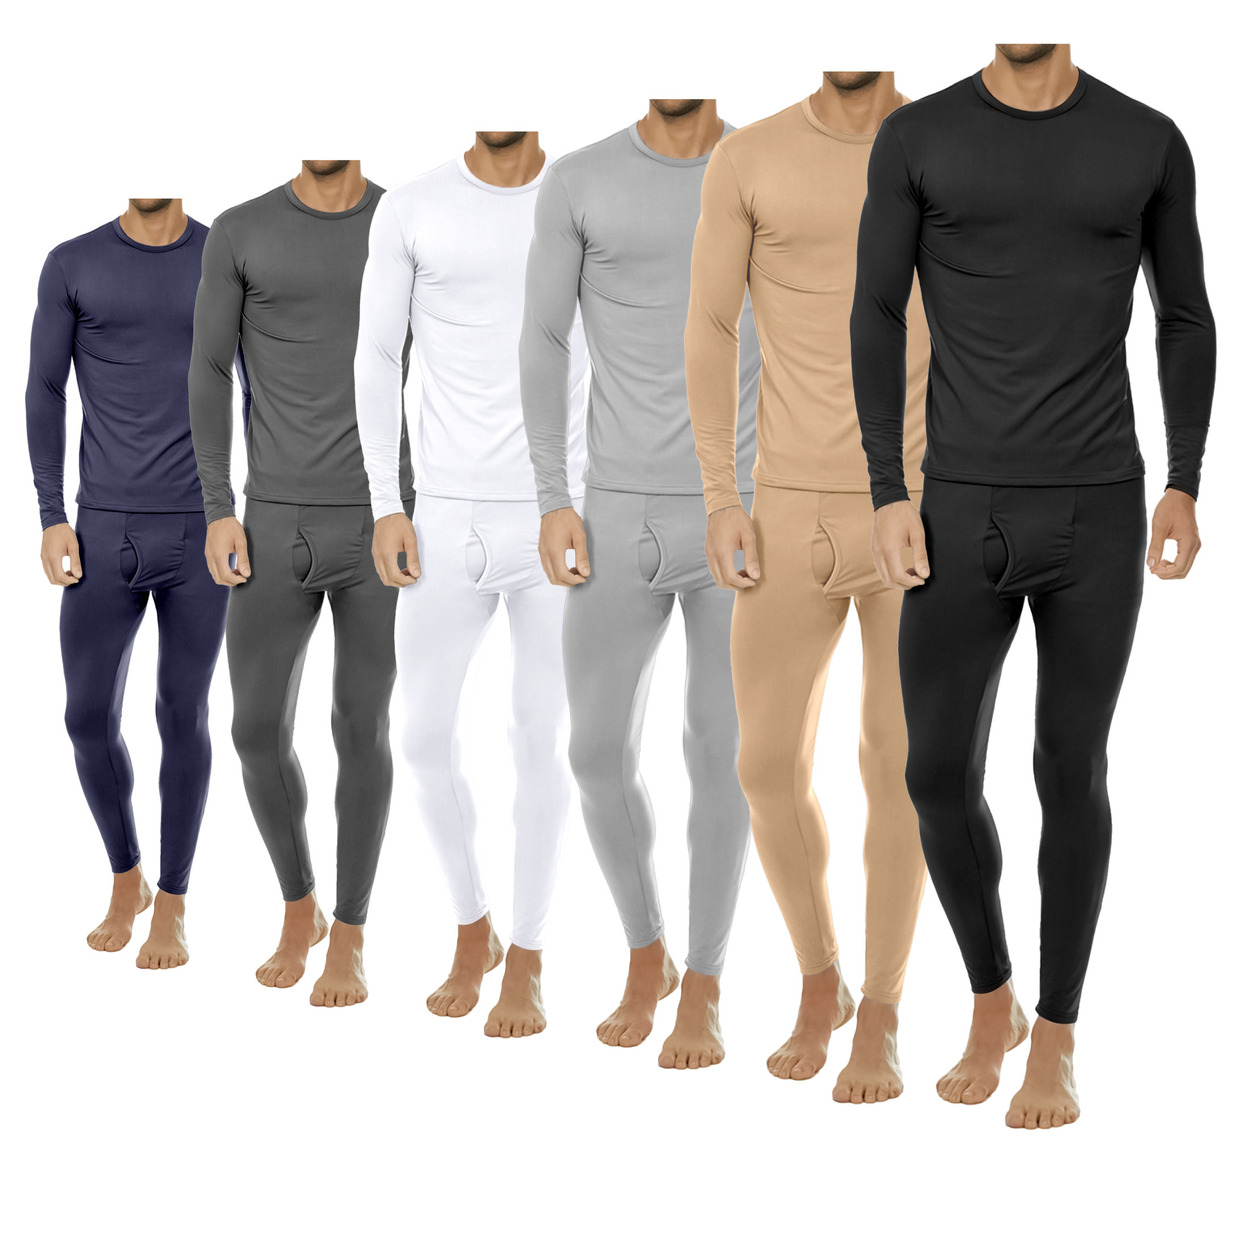 3-Sets: Men's Winter Warm Fleece Lined Thermal Underwear Set For Cold Weather - Medium